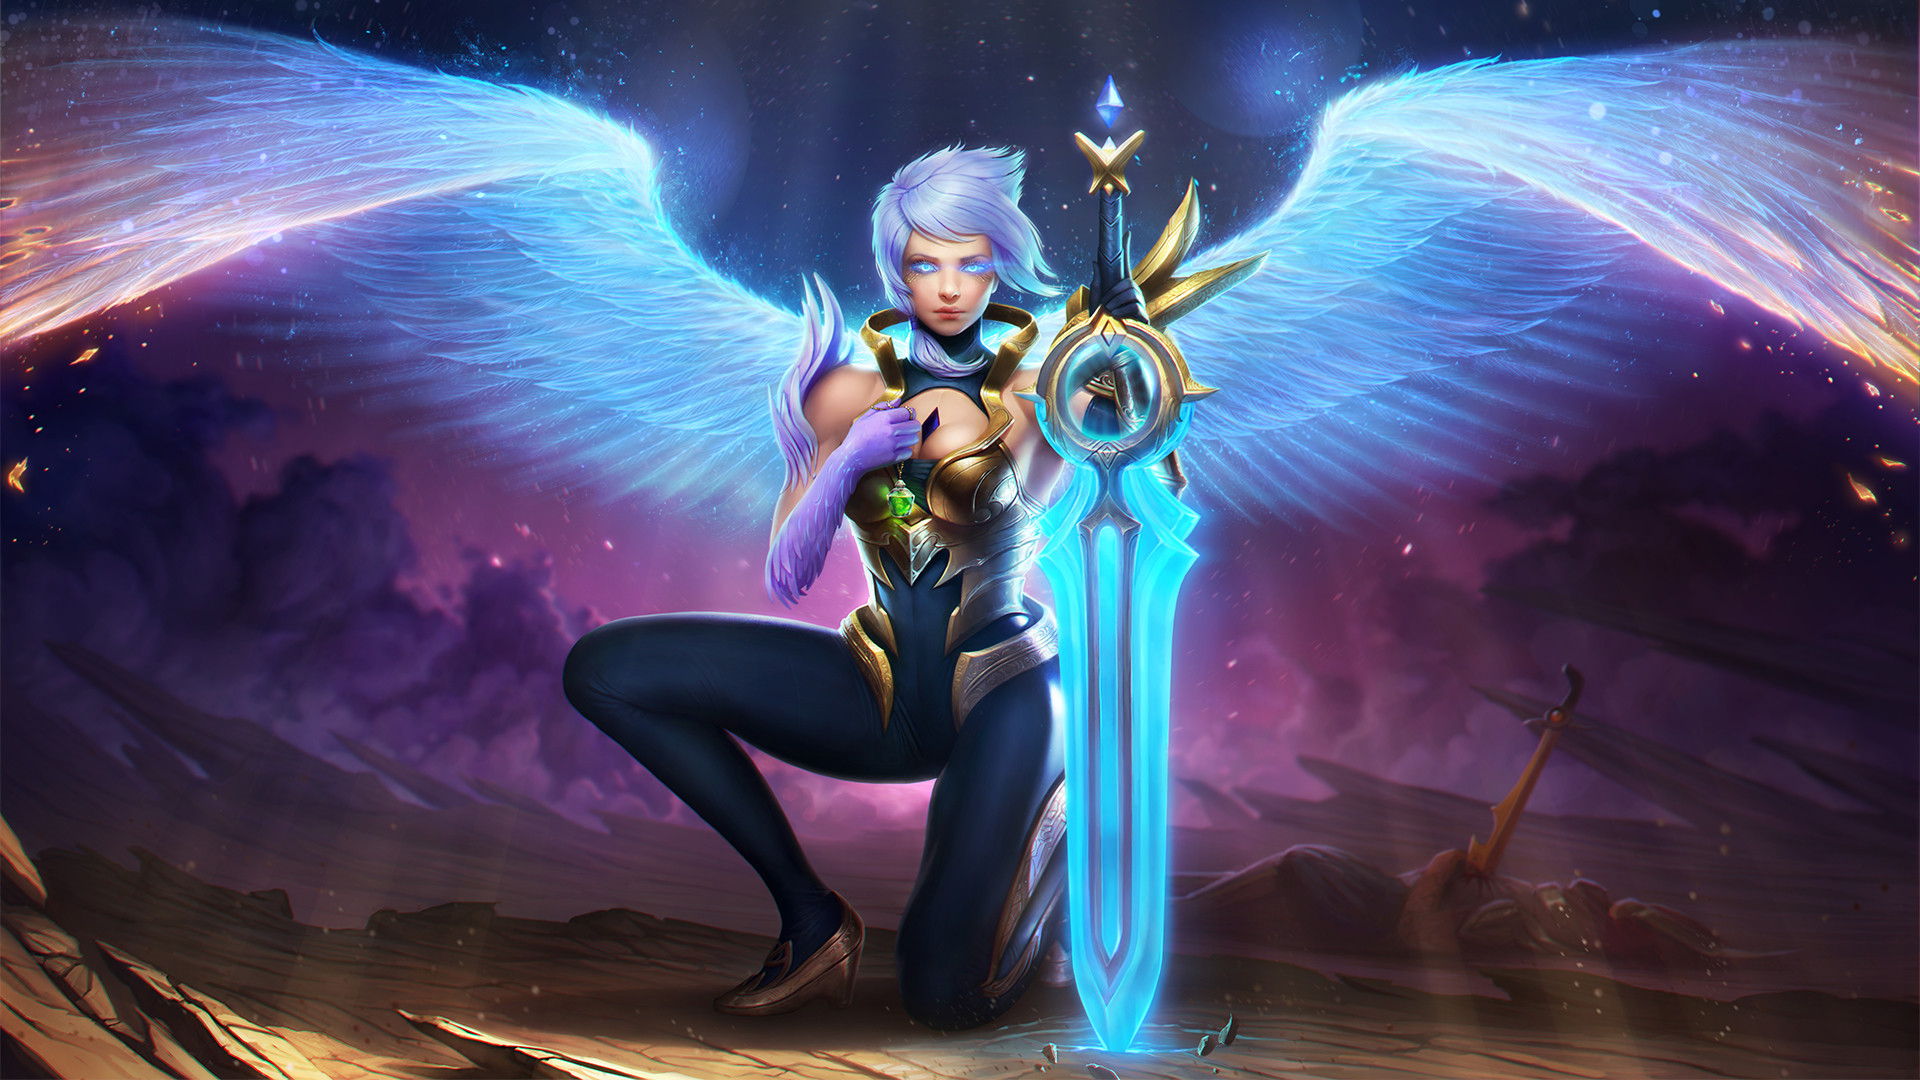 Wallpaper Riven, league of legends, online game, wings, sword